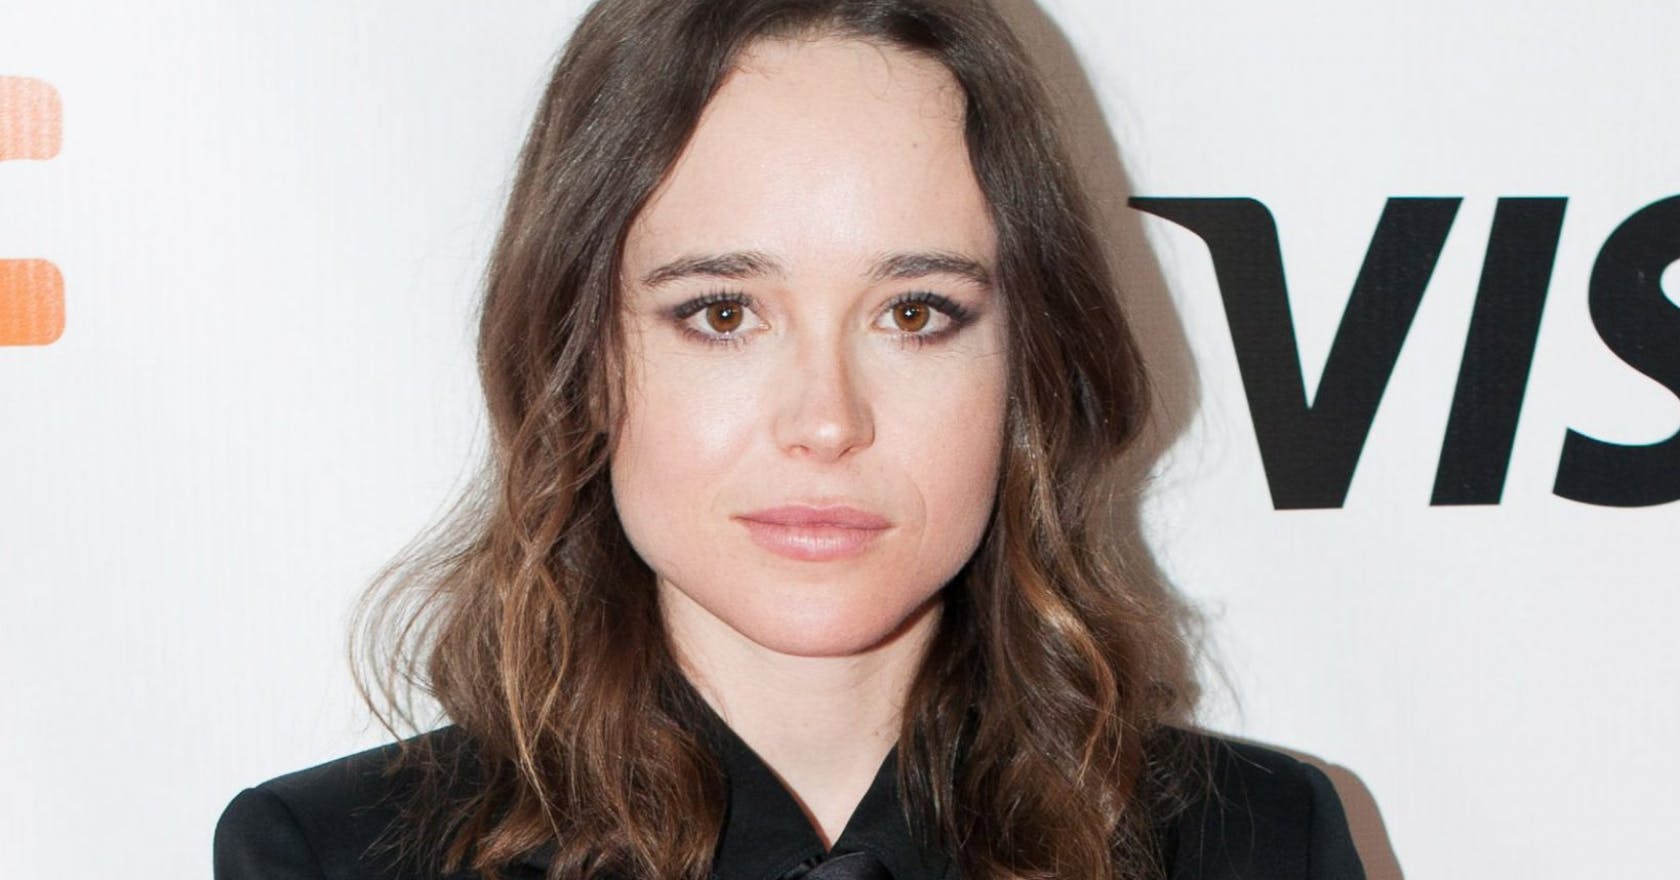 Ellen Page just won Instagram with her low-key wedding announcement